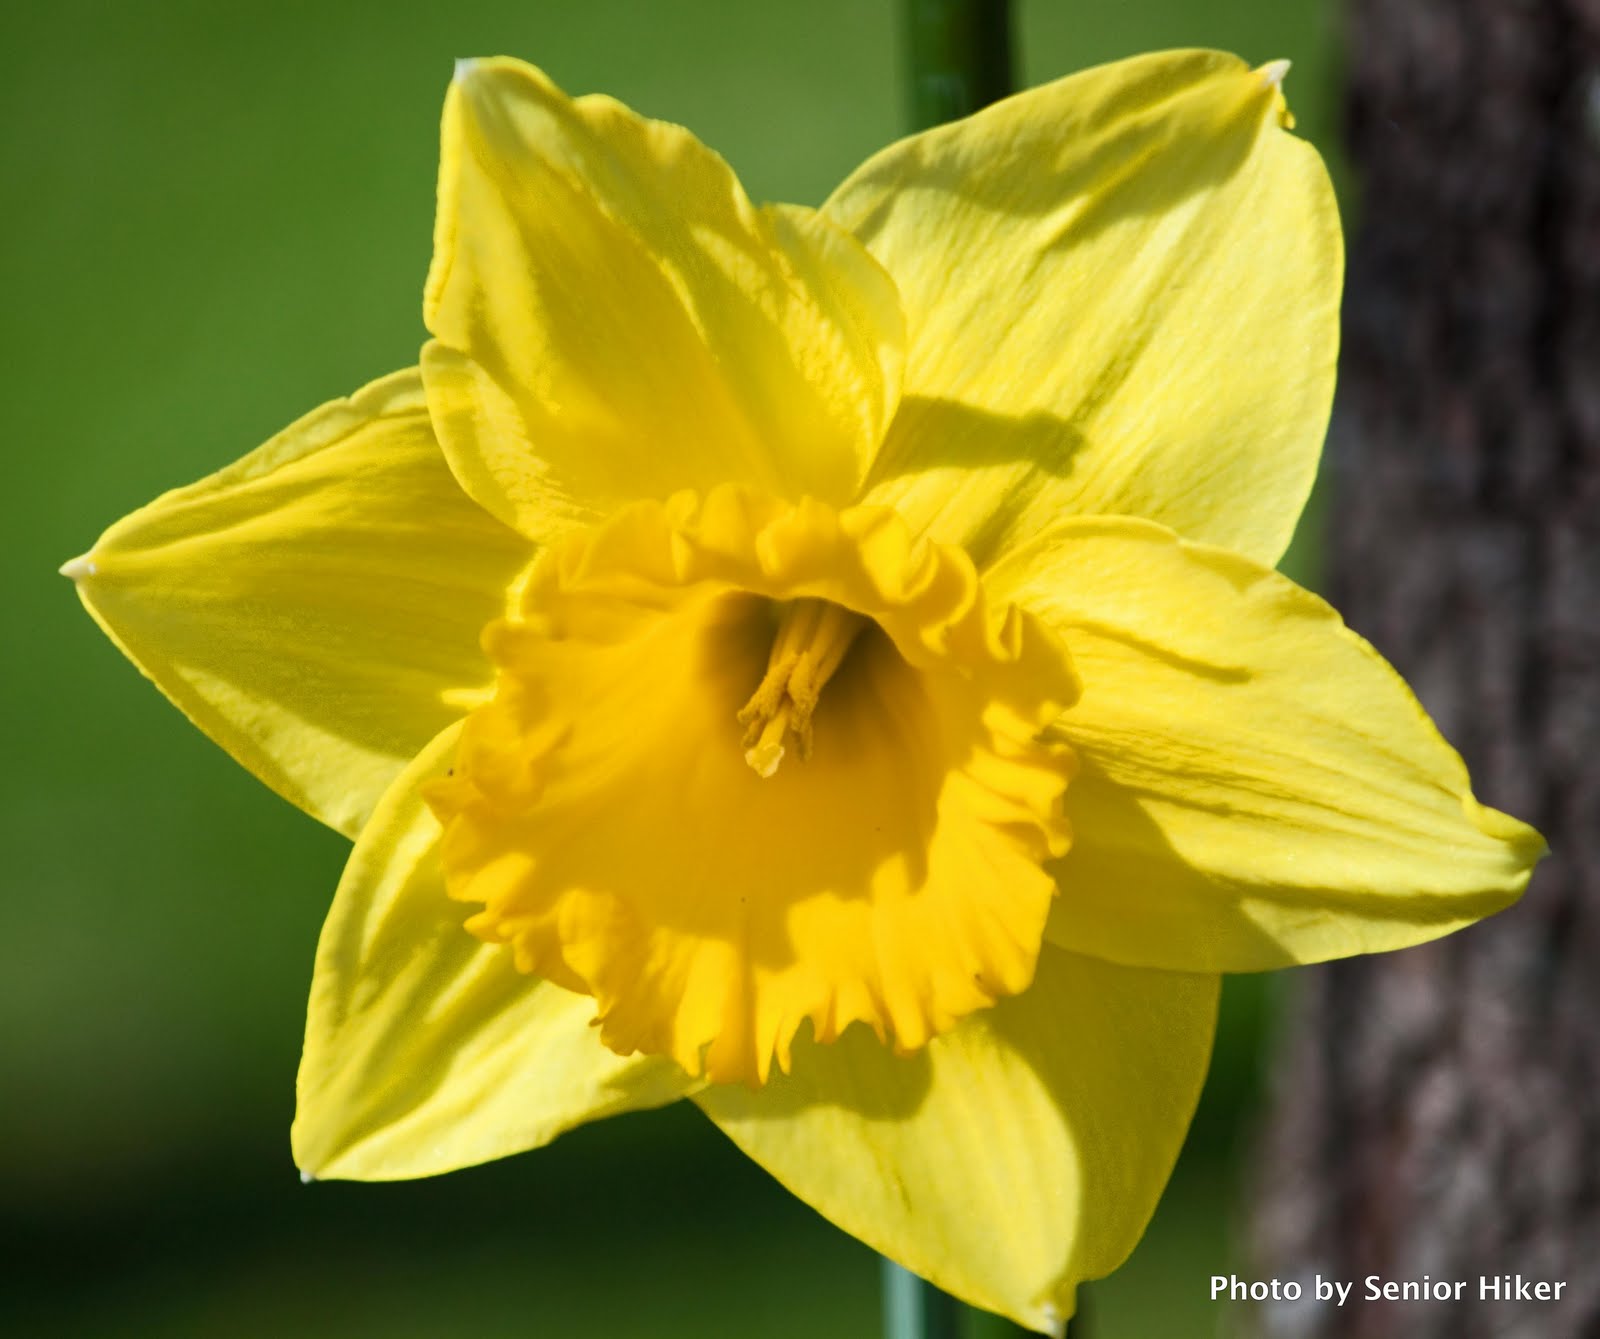 Brecks Colossal Daffodil